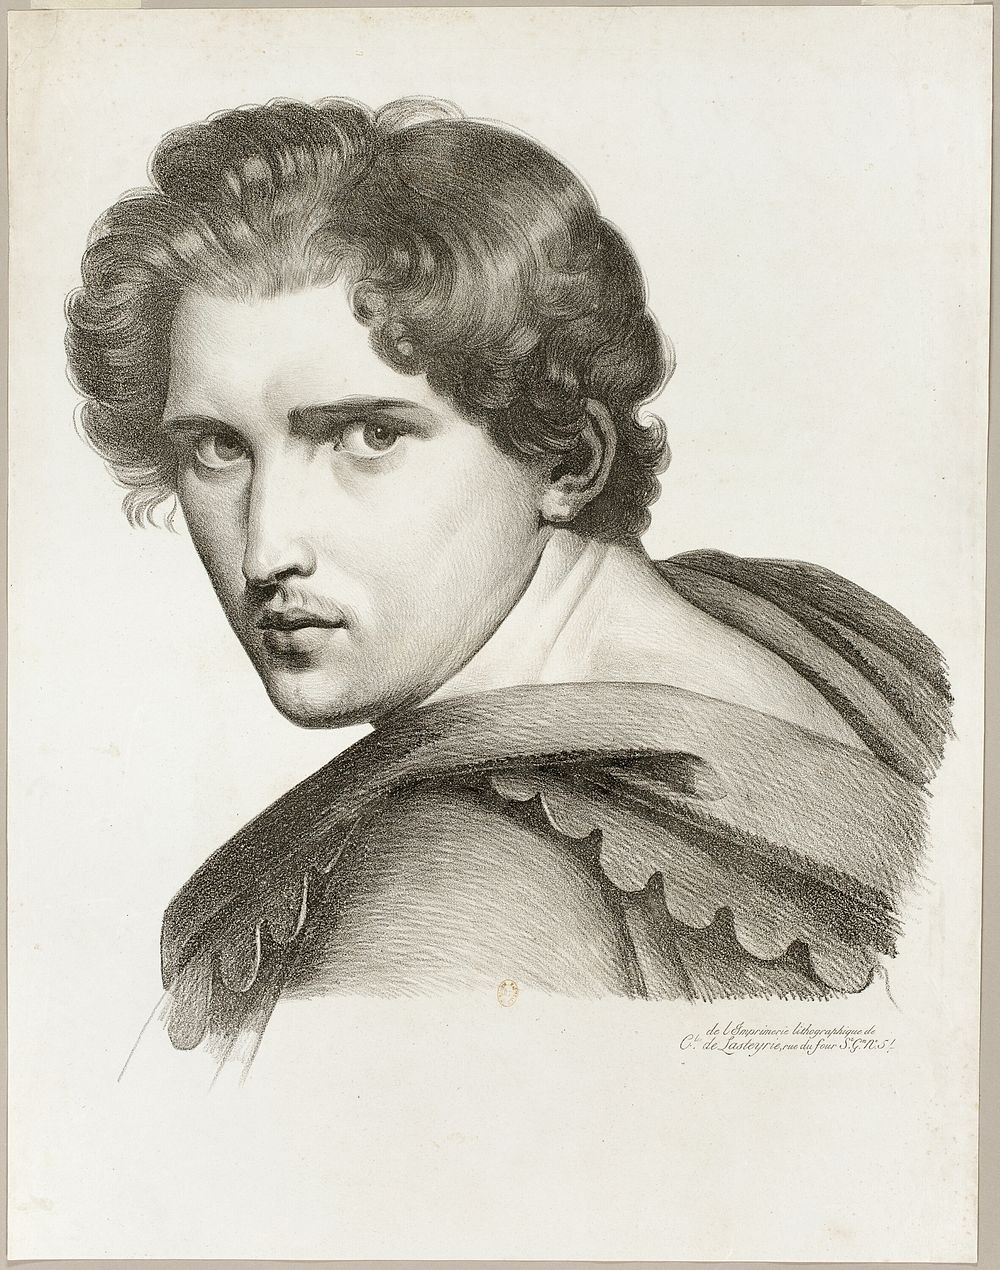 Expressive Head by comte de Charles Philibert Lasteyrie du Saillant (Printer)